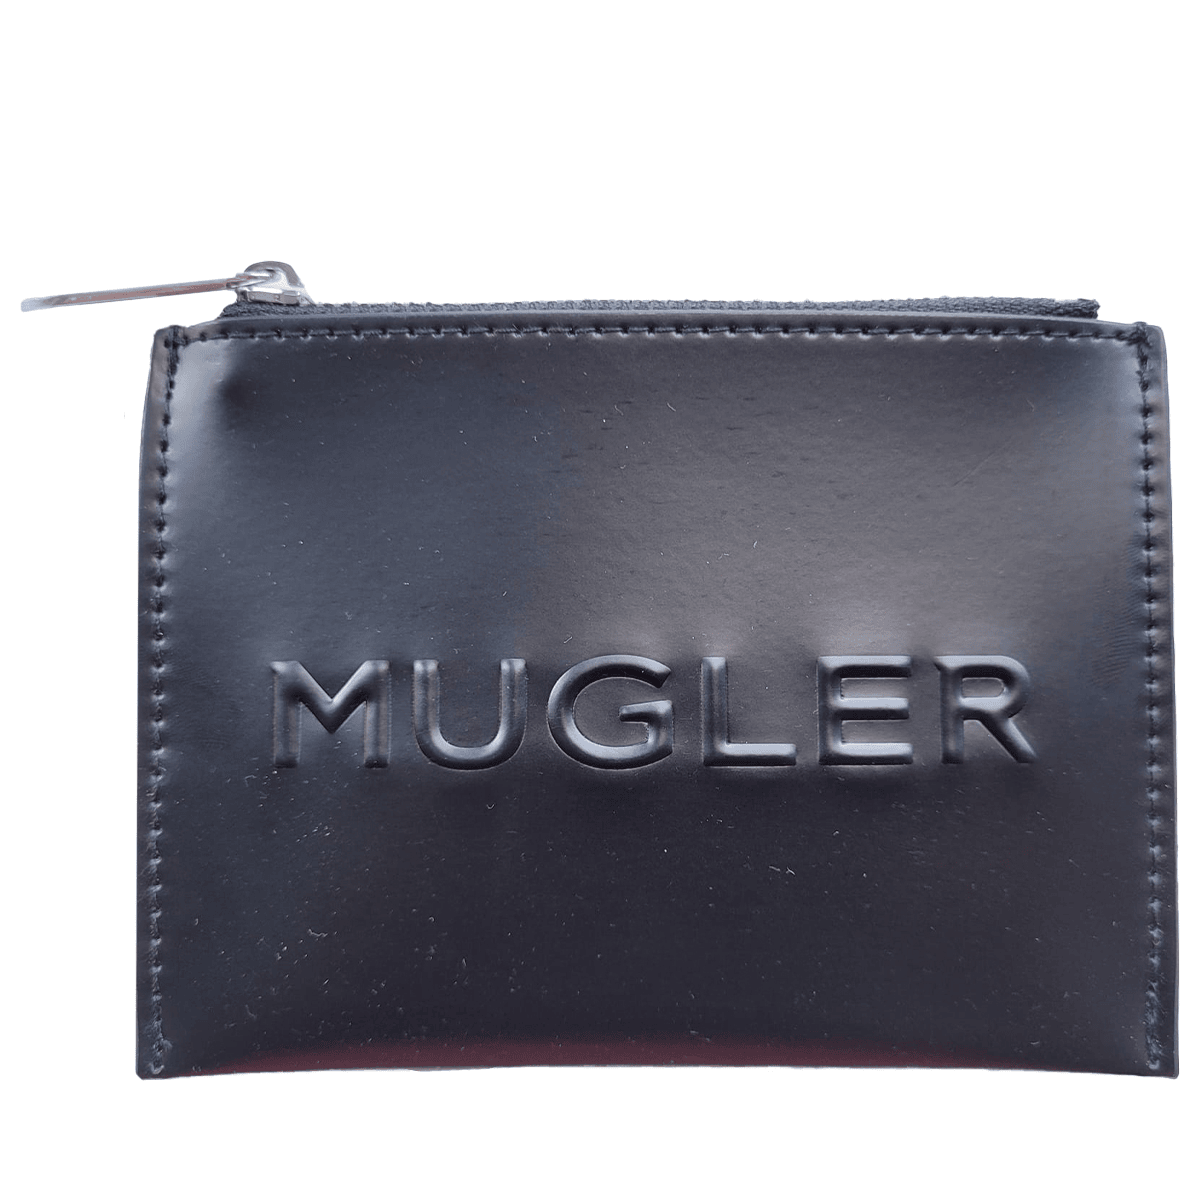 Thierry mugler wallet